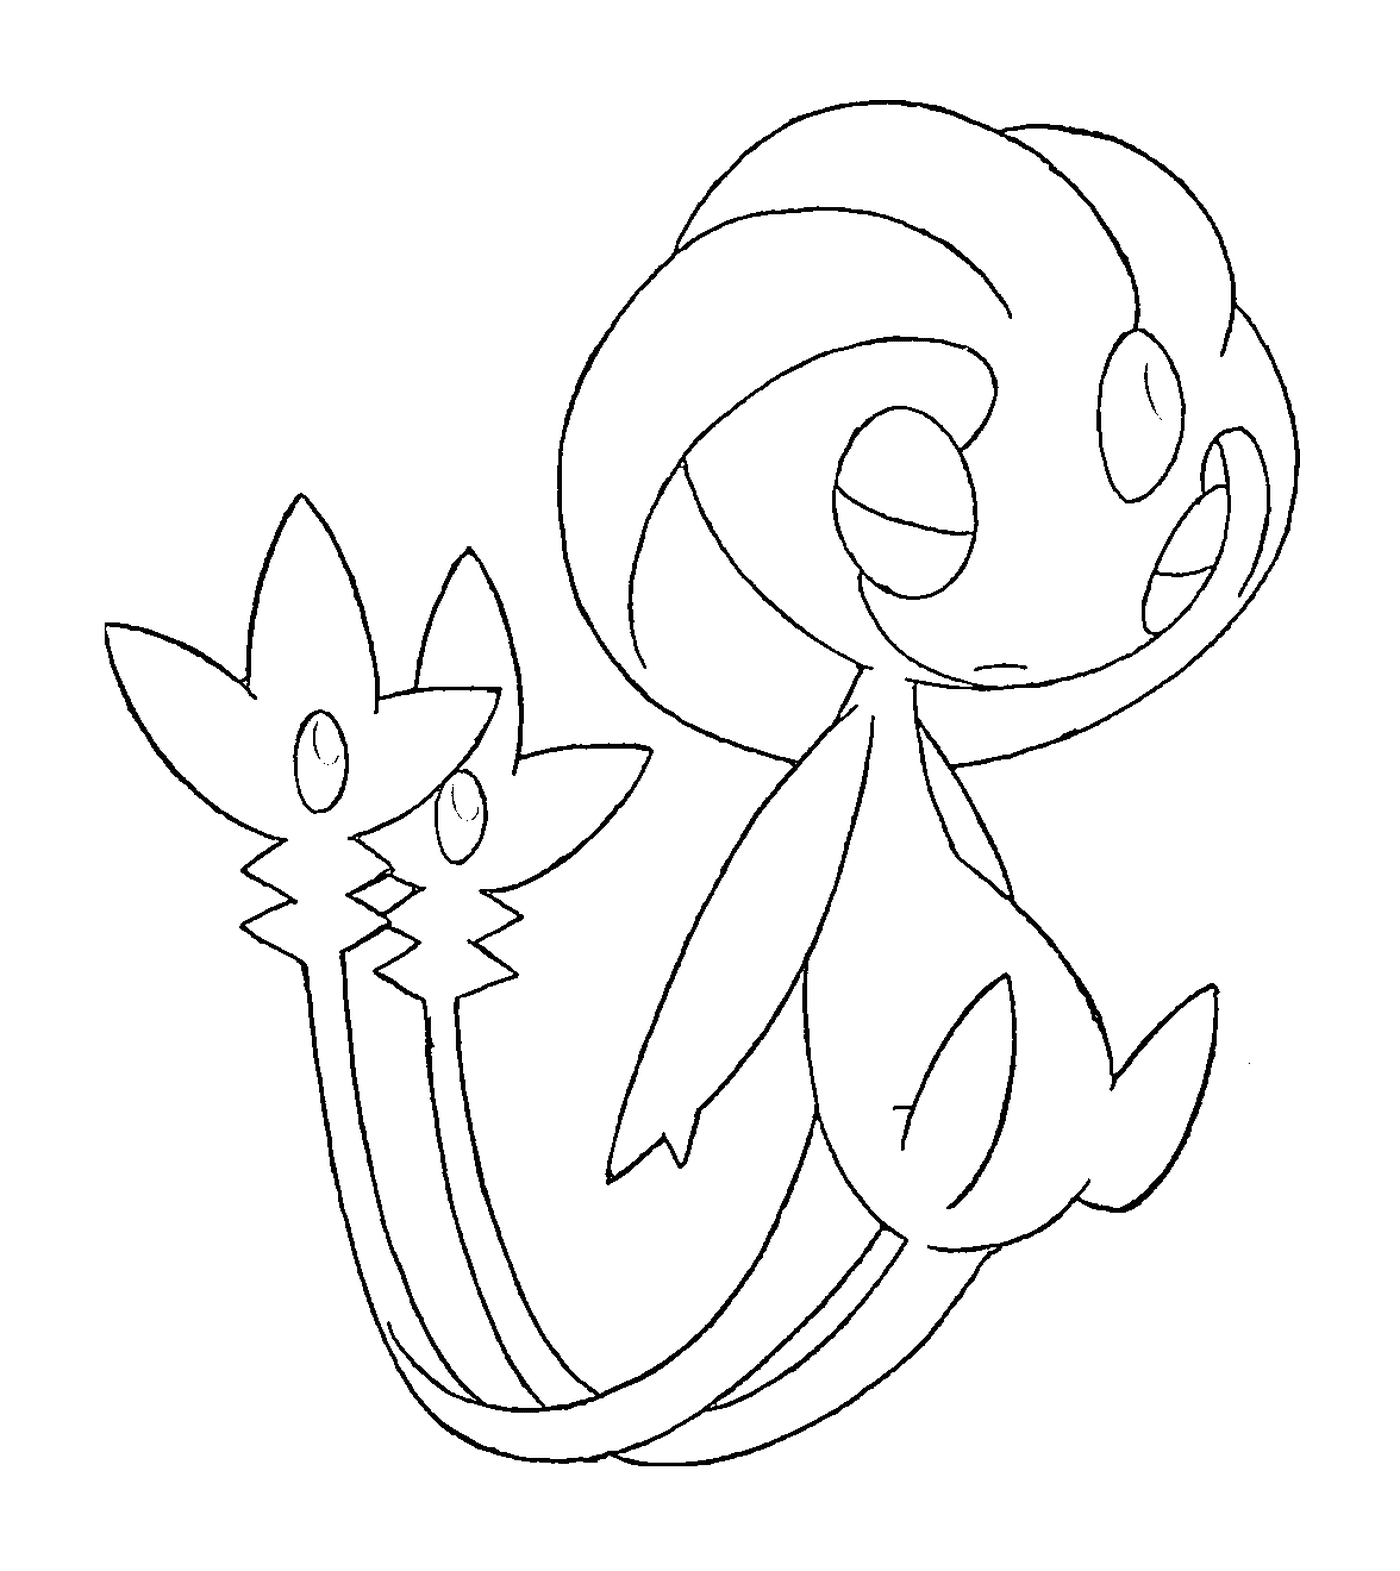  Crehelf Pokémon preto desenhado 